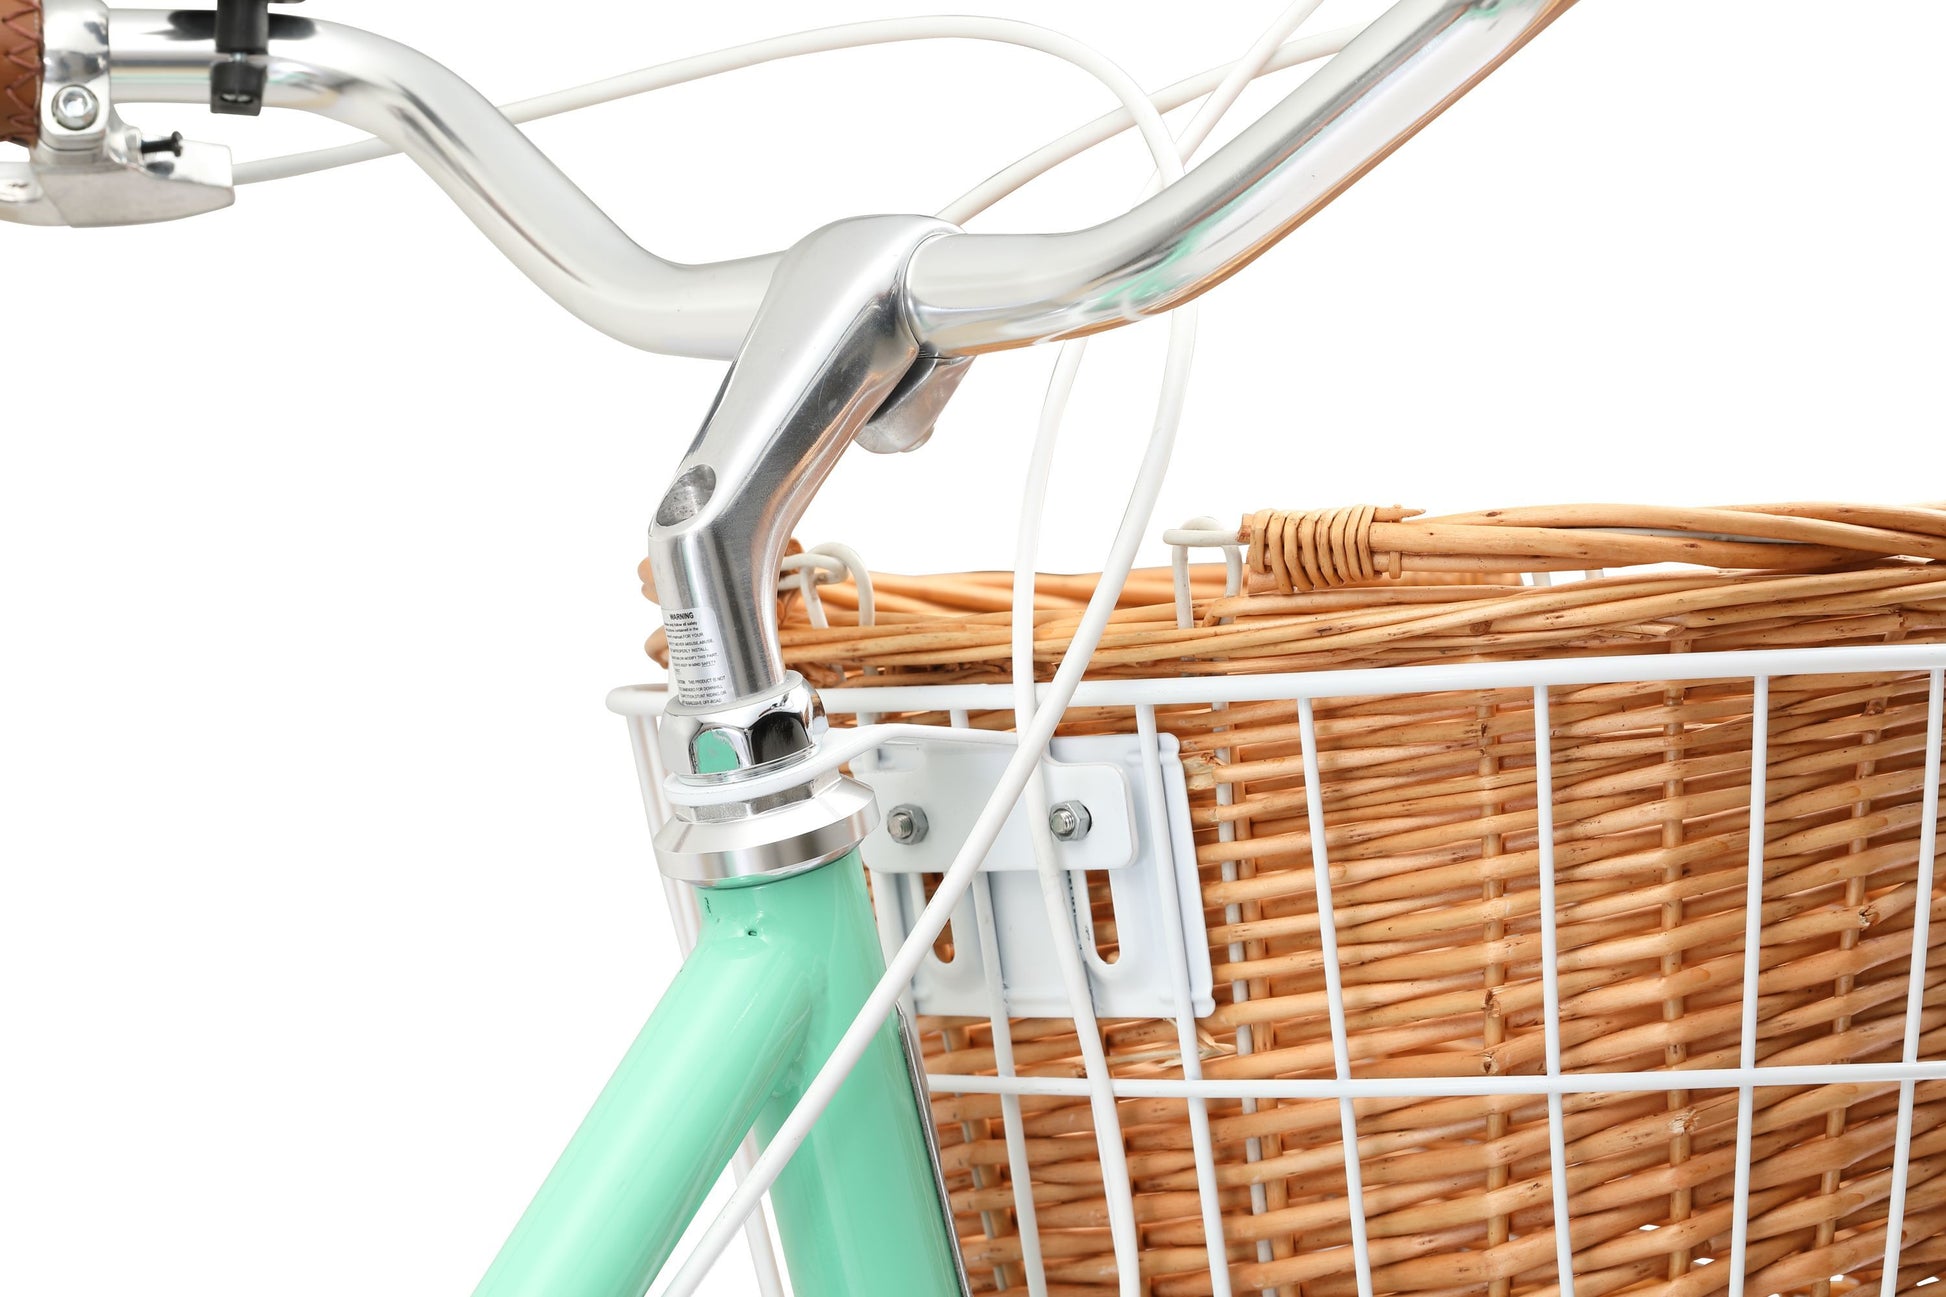 Ladies Classic Plus Vintage Bike in Mint Green showing metal white basket with wicker basket on inside from Reid Cycles Australia